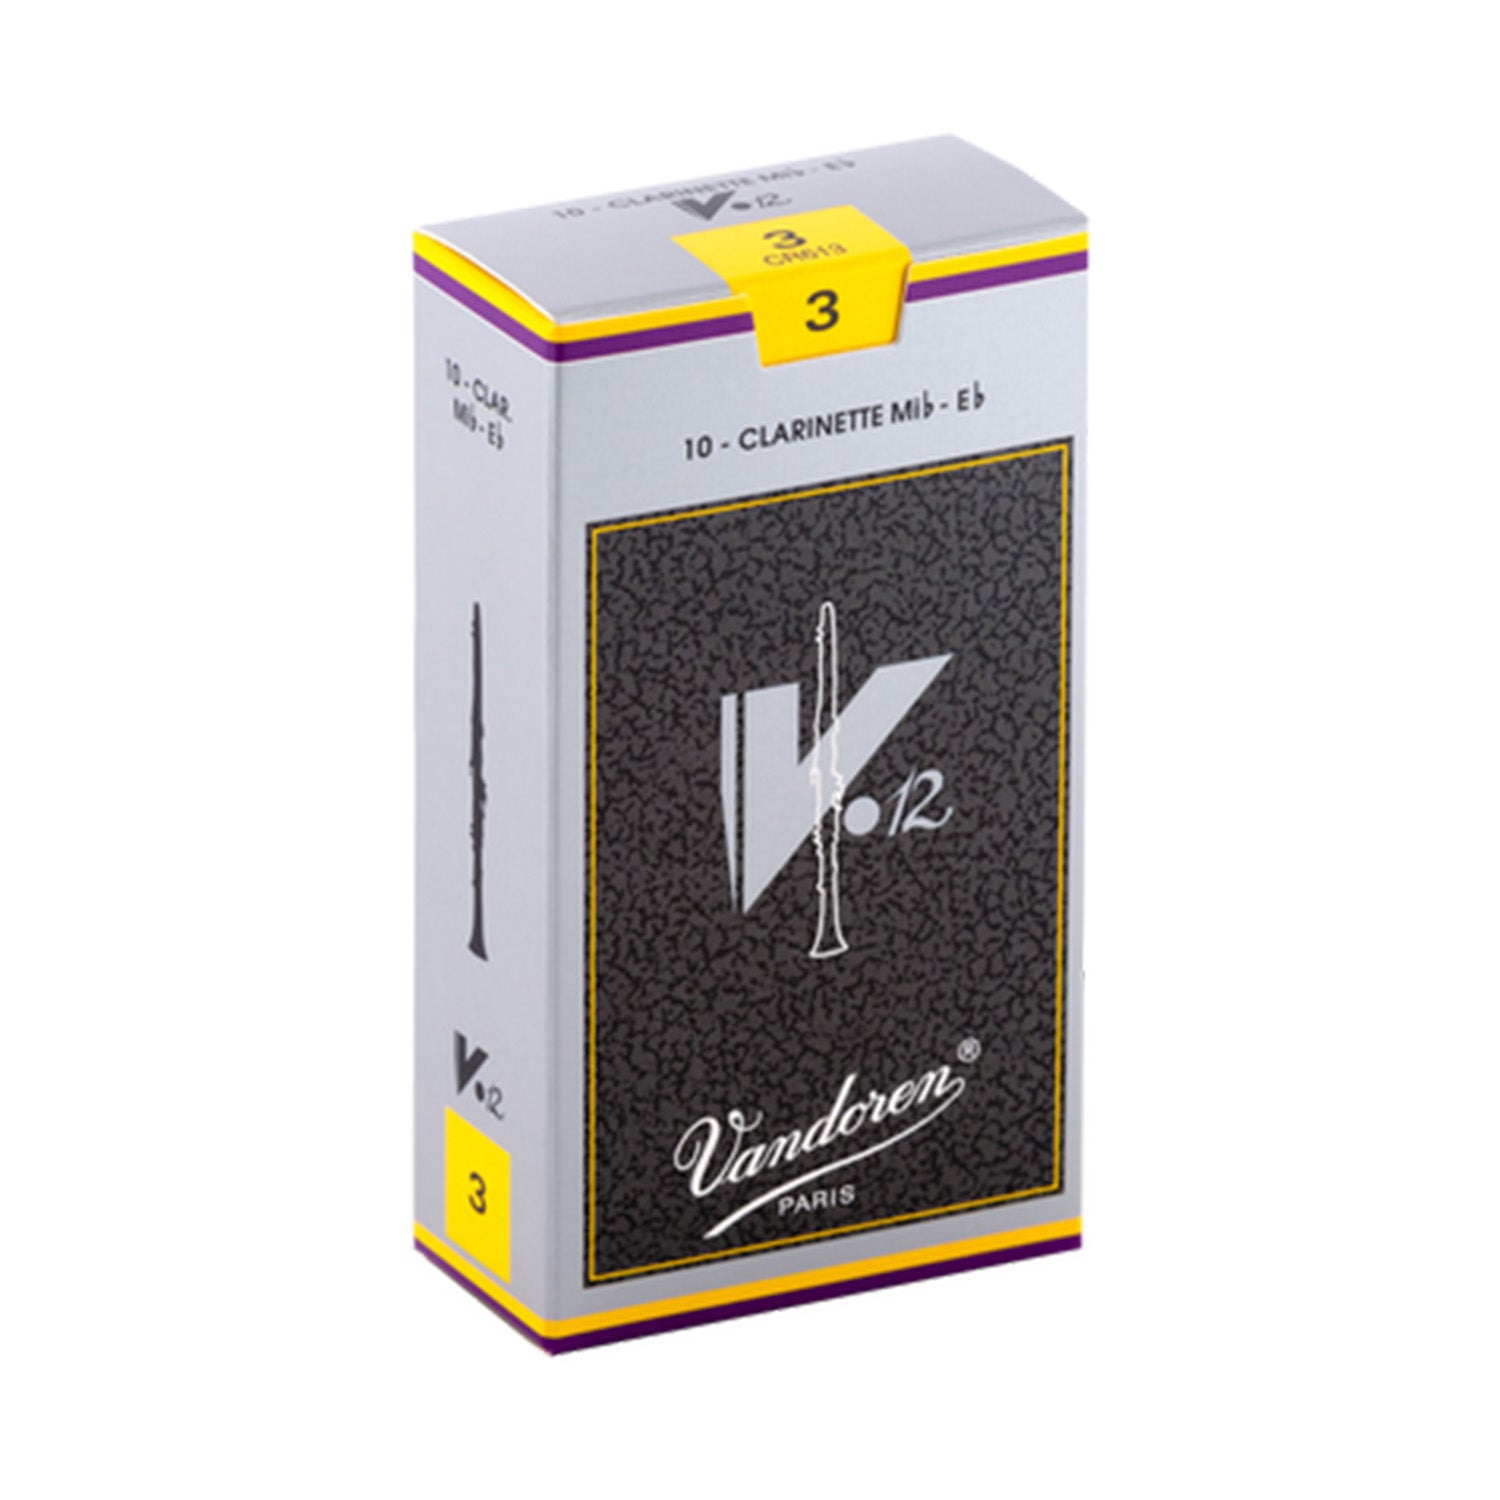 Box of Vandoren V12 Eb clarinet reeds against a white background